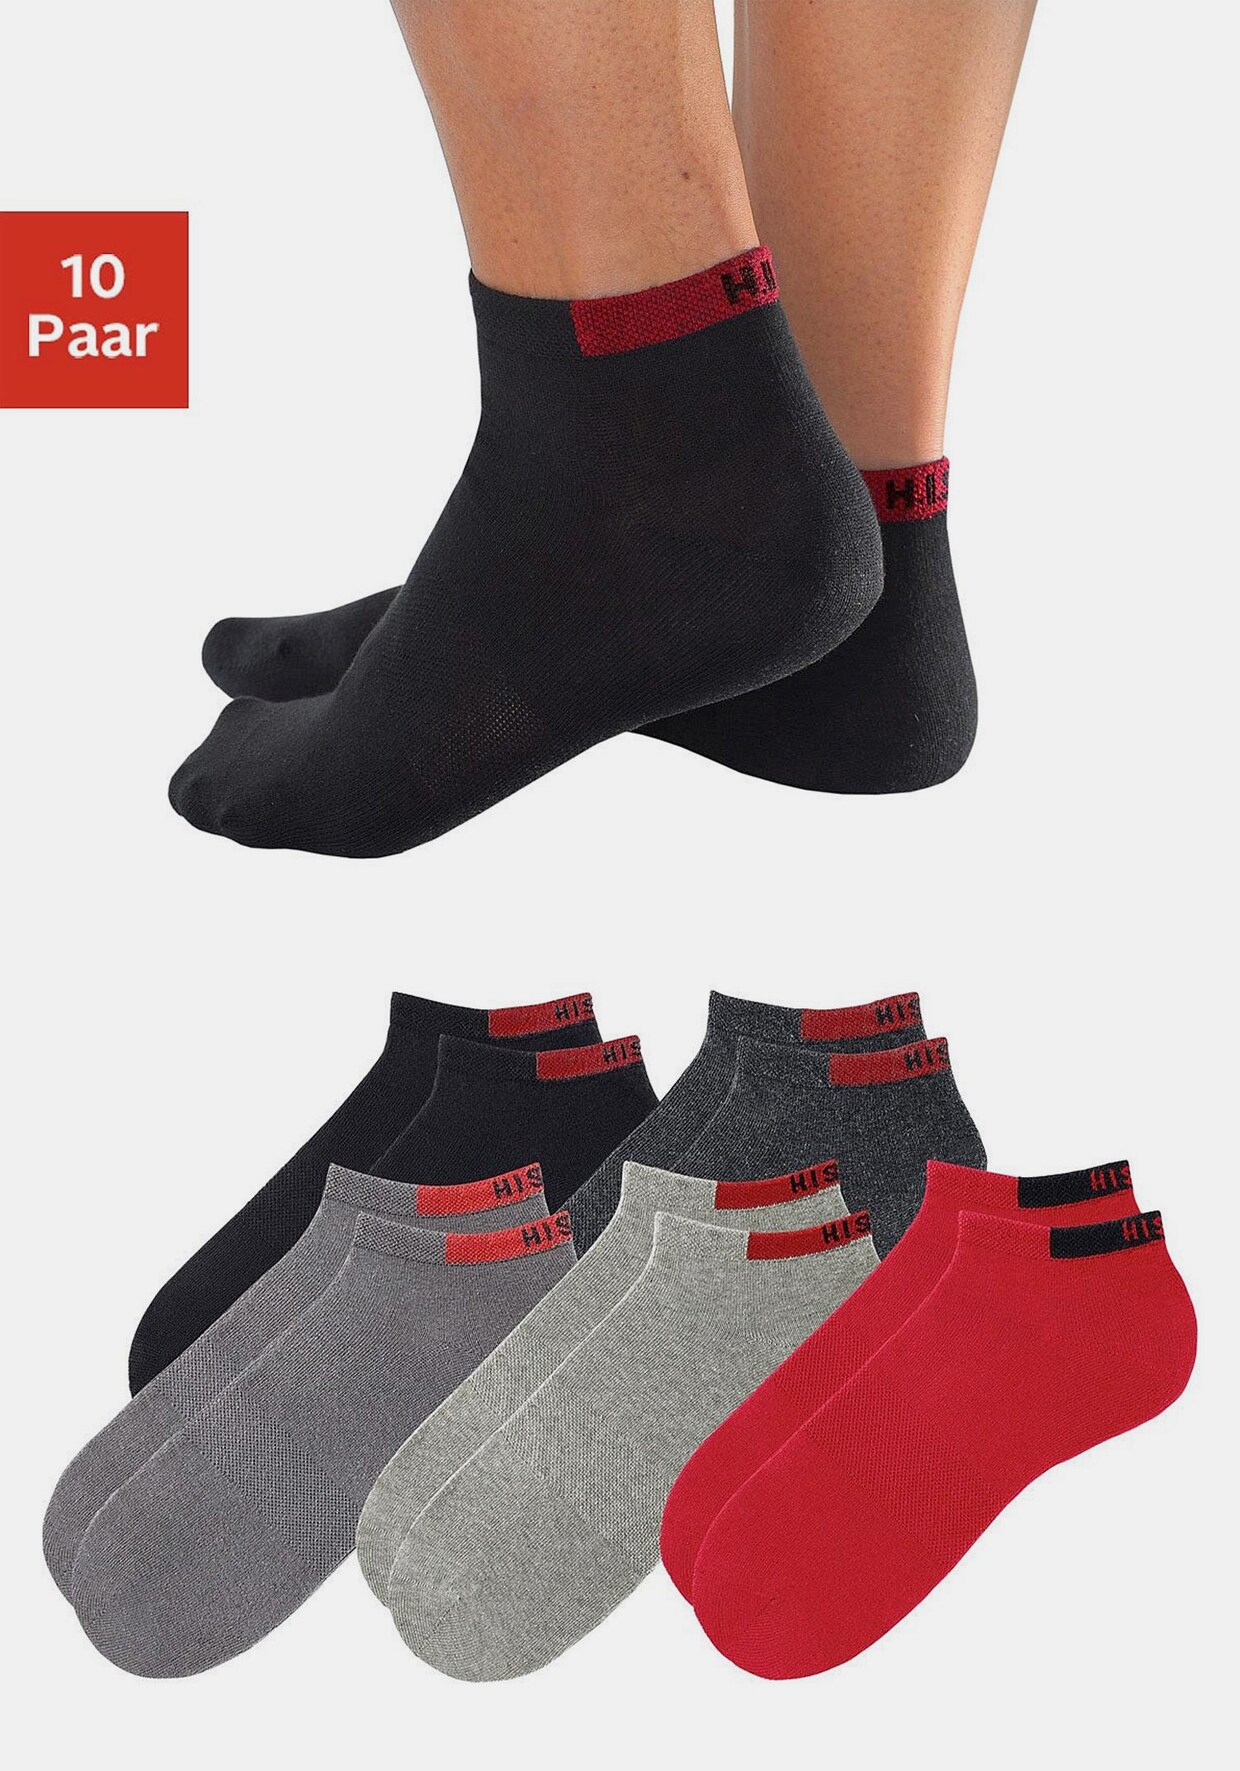 H.I.S Sneakersocken - 2x schwarz + 2x grau + 2x rot + 2x anthrazit-meliert + 2x hellgrau-meliert